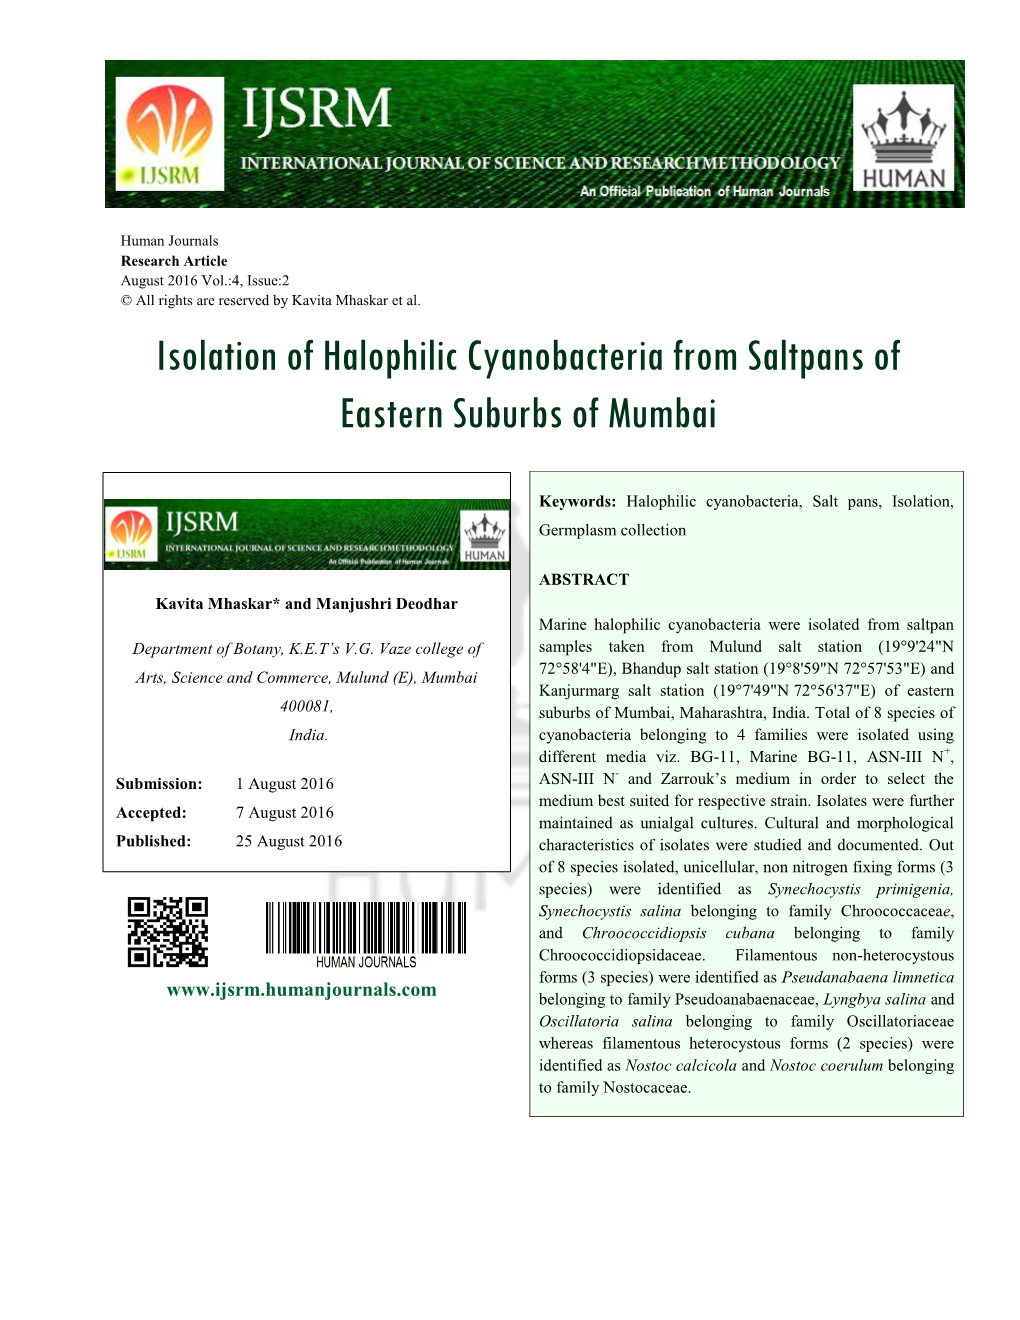 Isolation of Halophilic Cyanobacteria from Saltpans of Eastern Suburbs of Mumbai